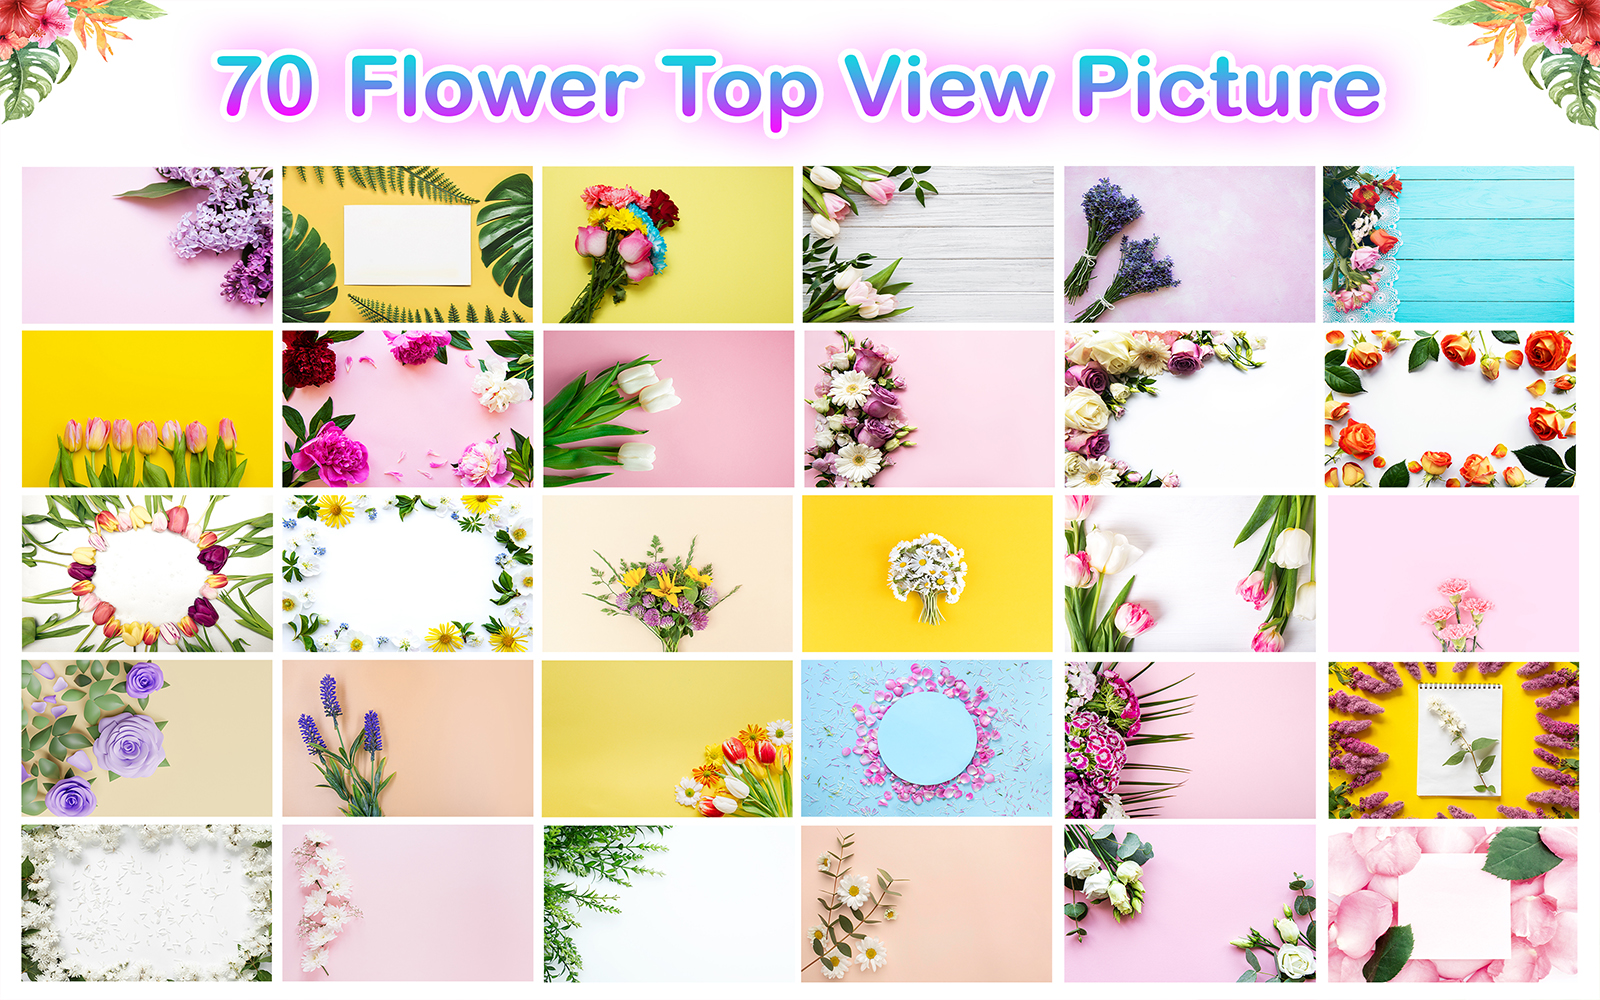 Flower Top View Picture Bundle